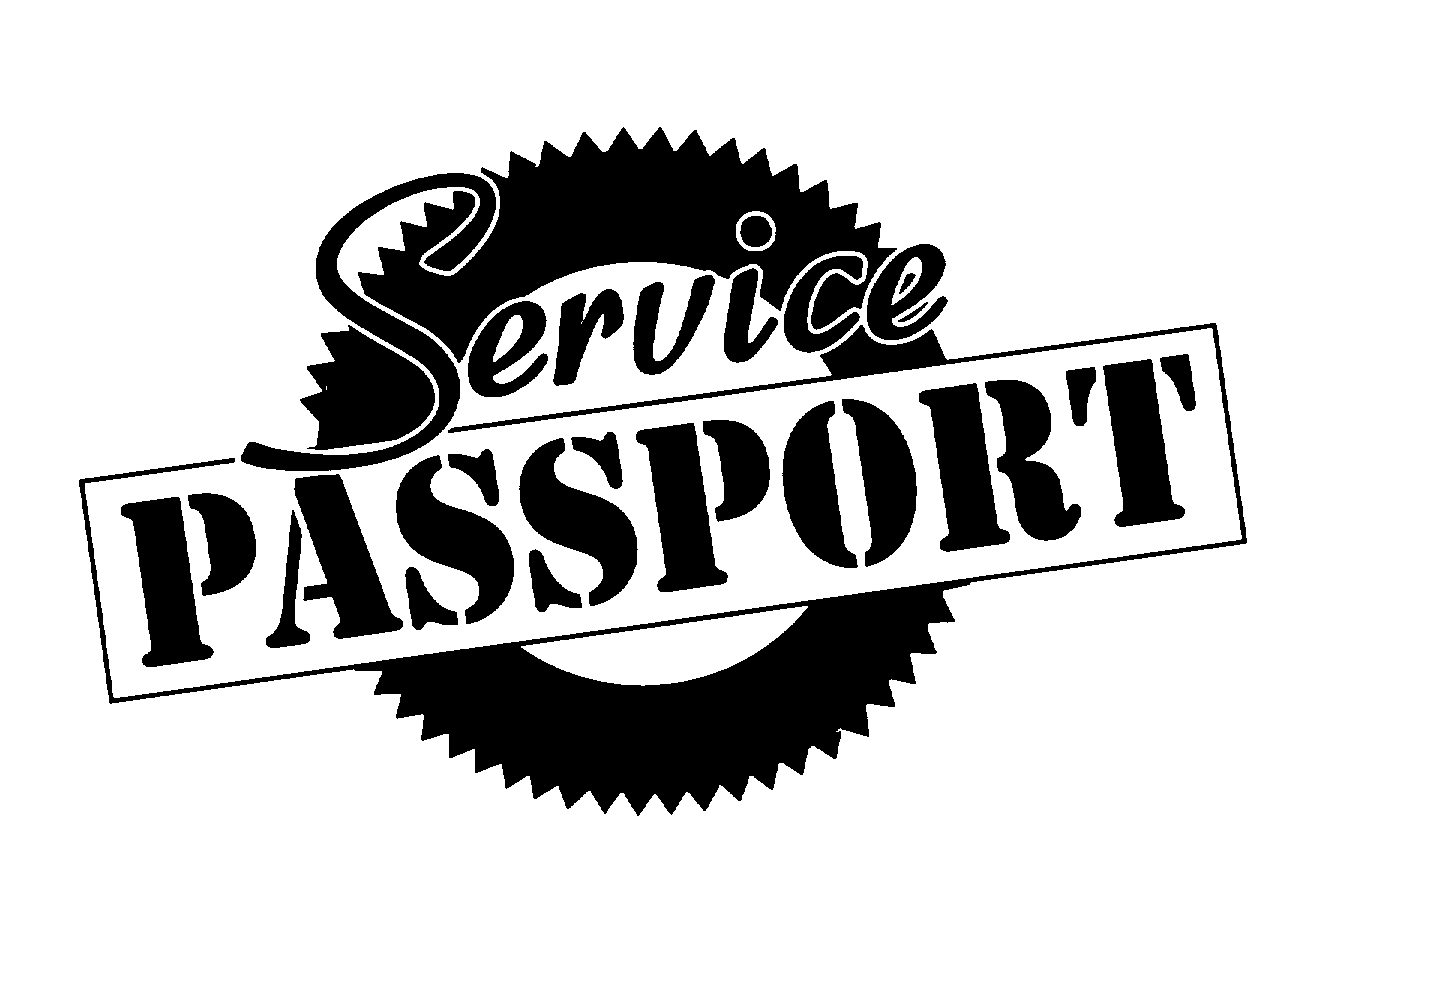  SERVICE PASSPORT